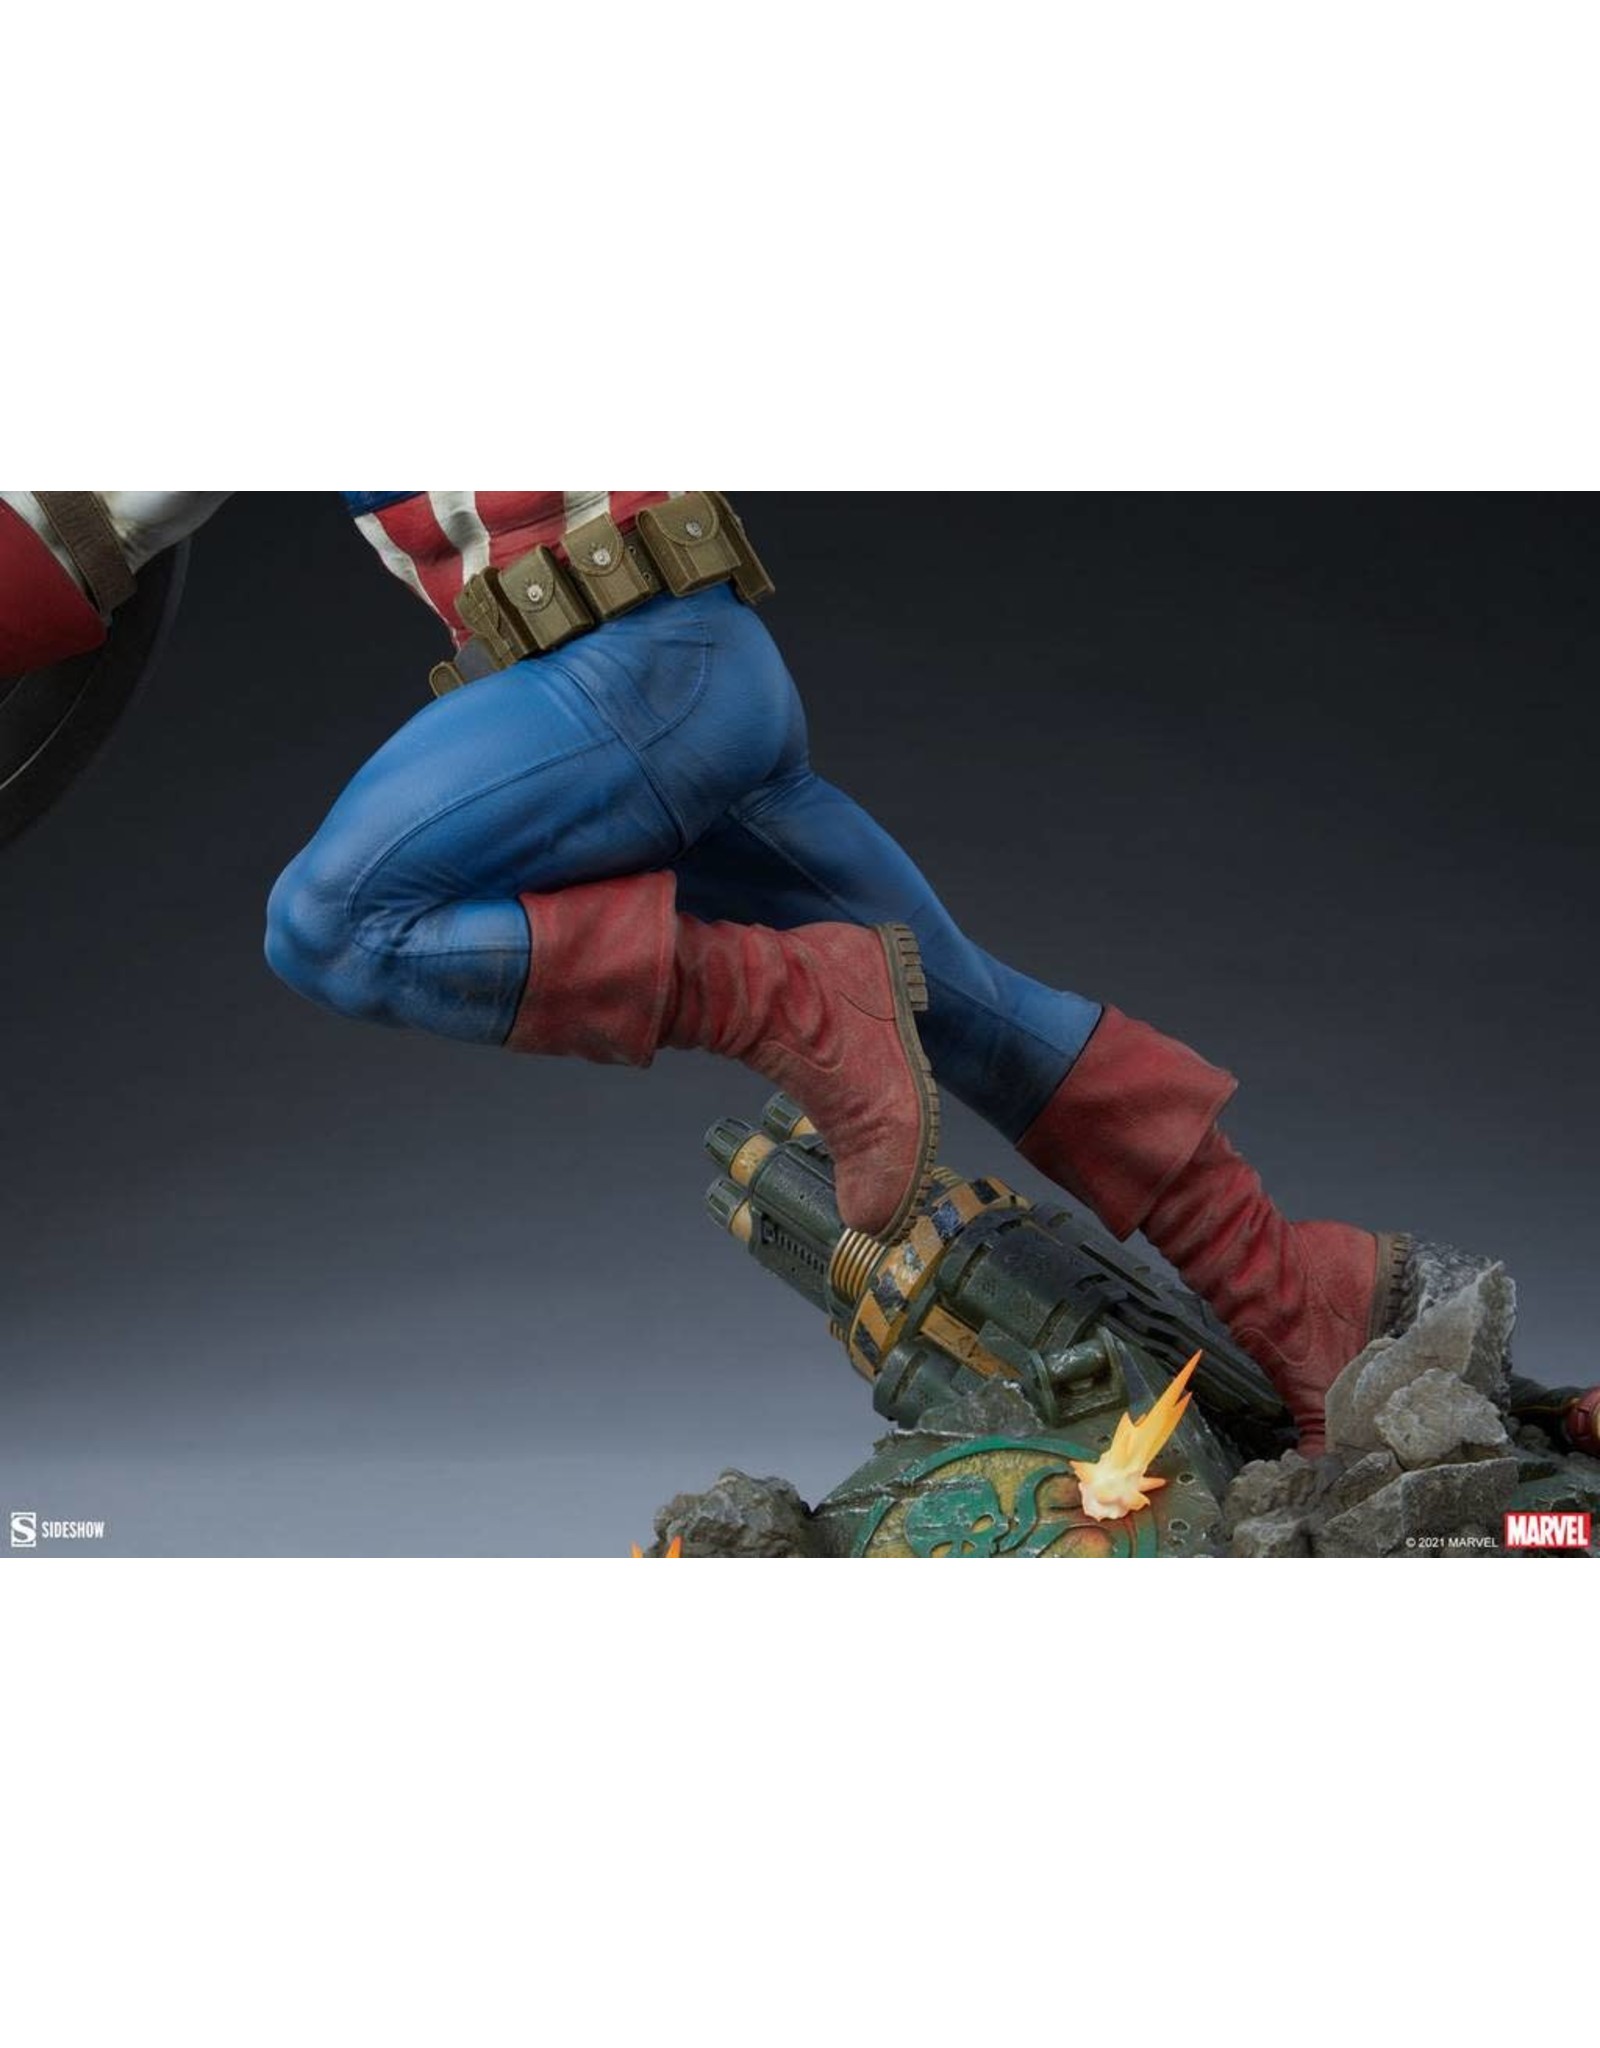 Sideshow Collectibles CAPTAIN AMERICA Premium Format Statue 53 cm - Captain America